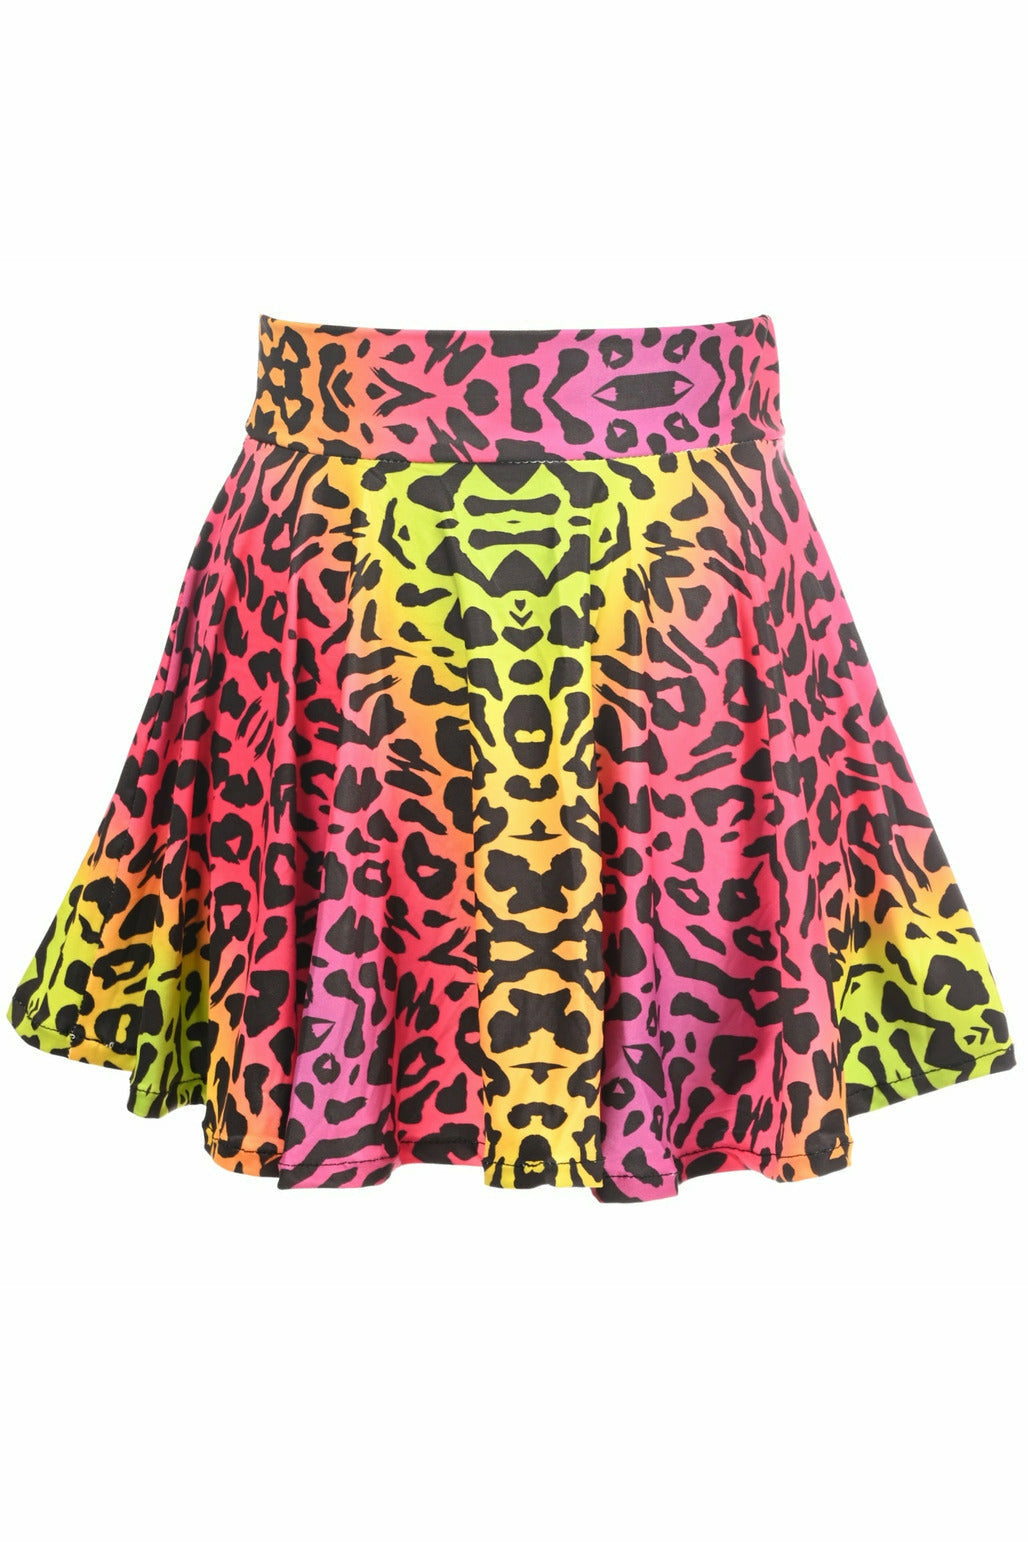 Rainbow Leopard Print Stretch Lycra Skirt - Lust Charm 